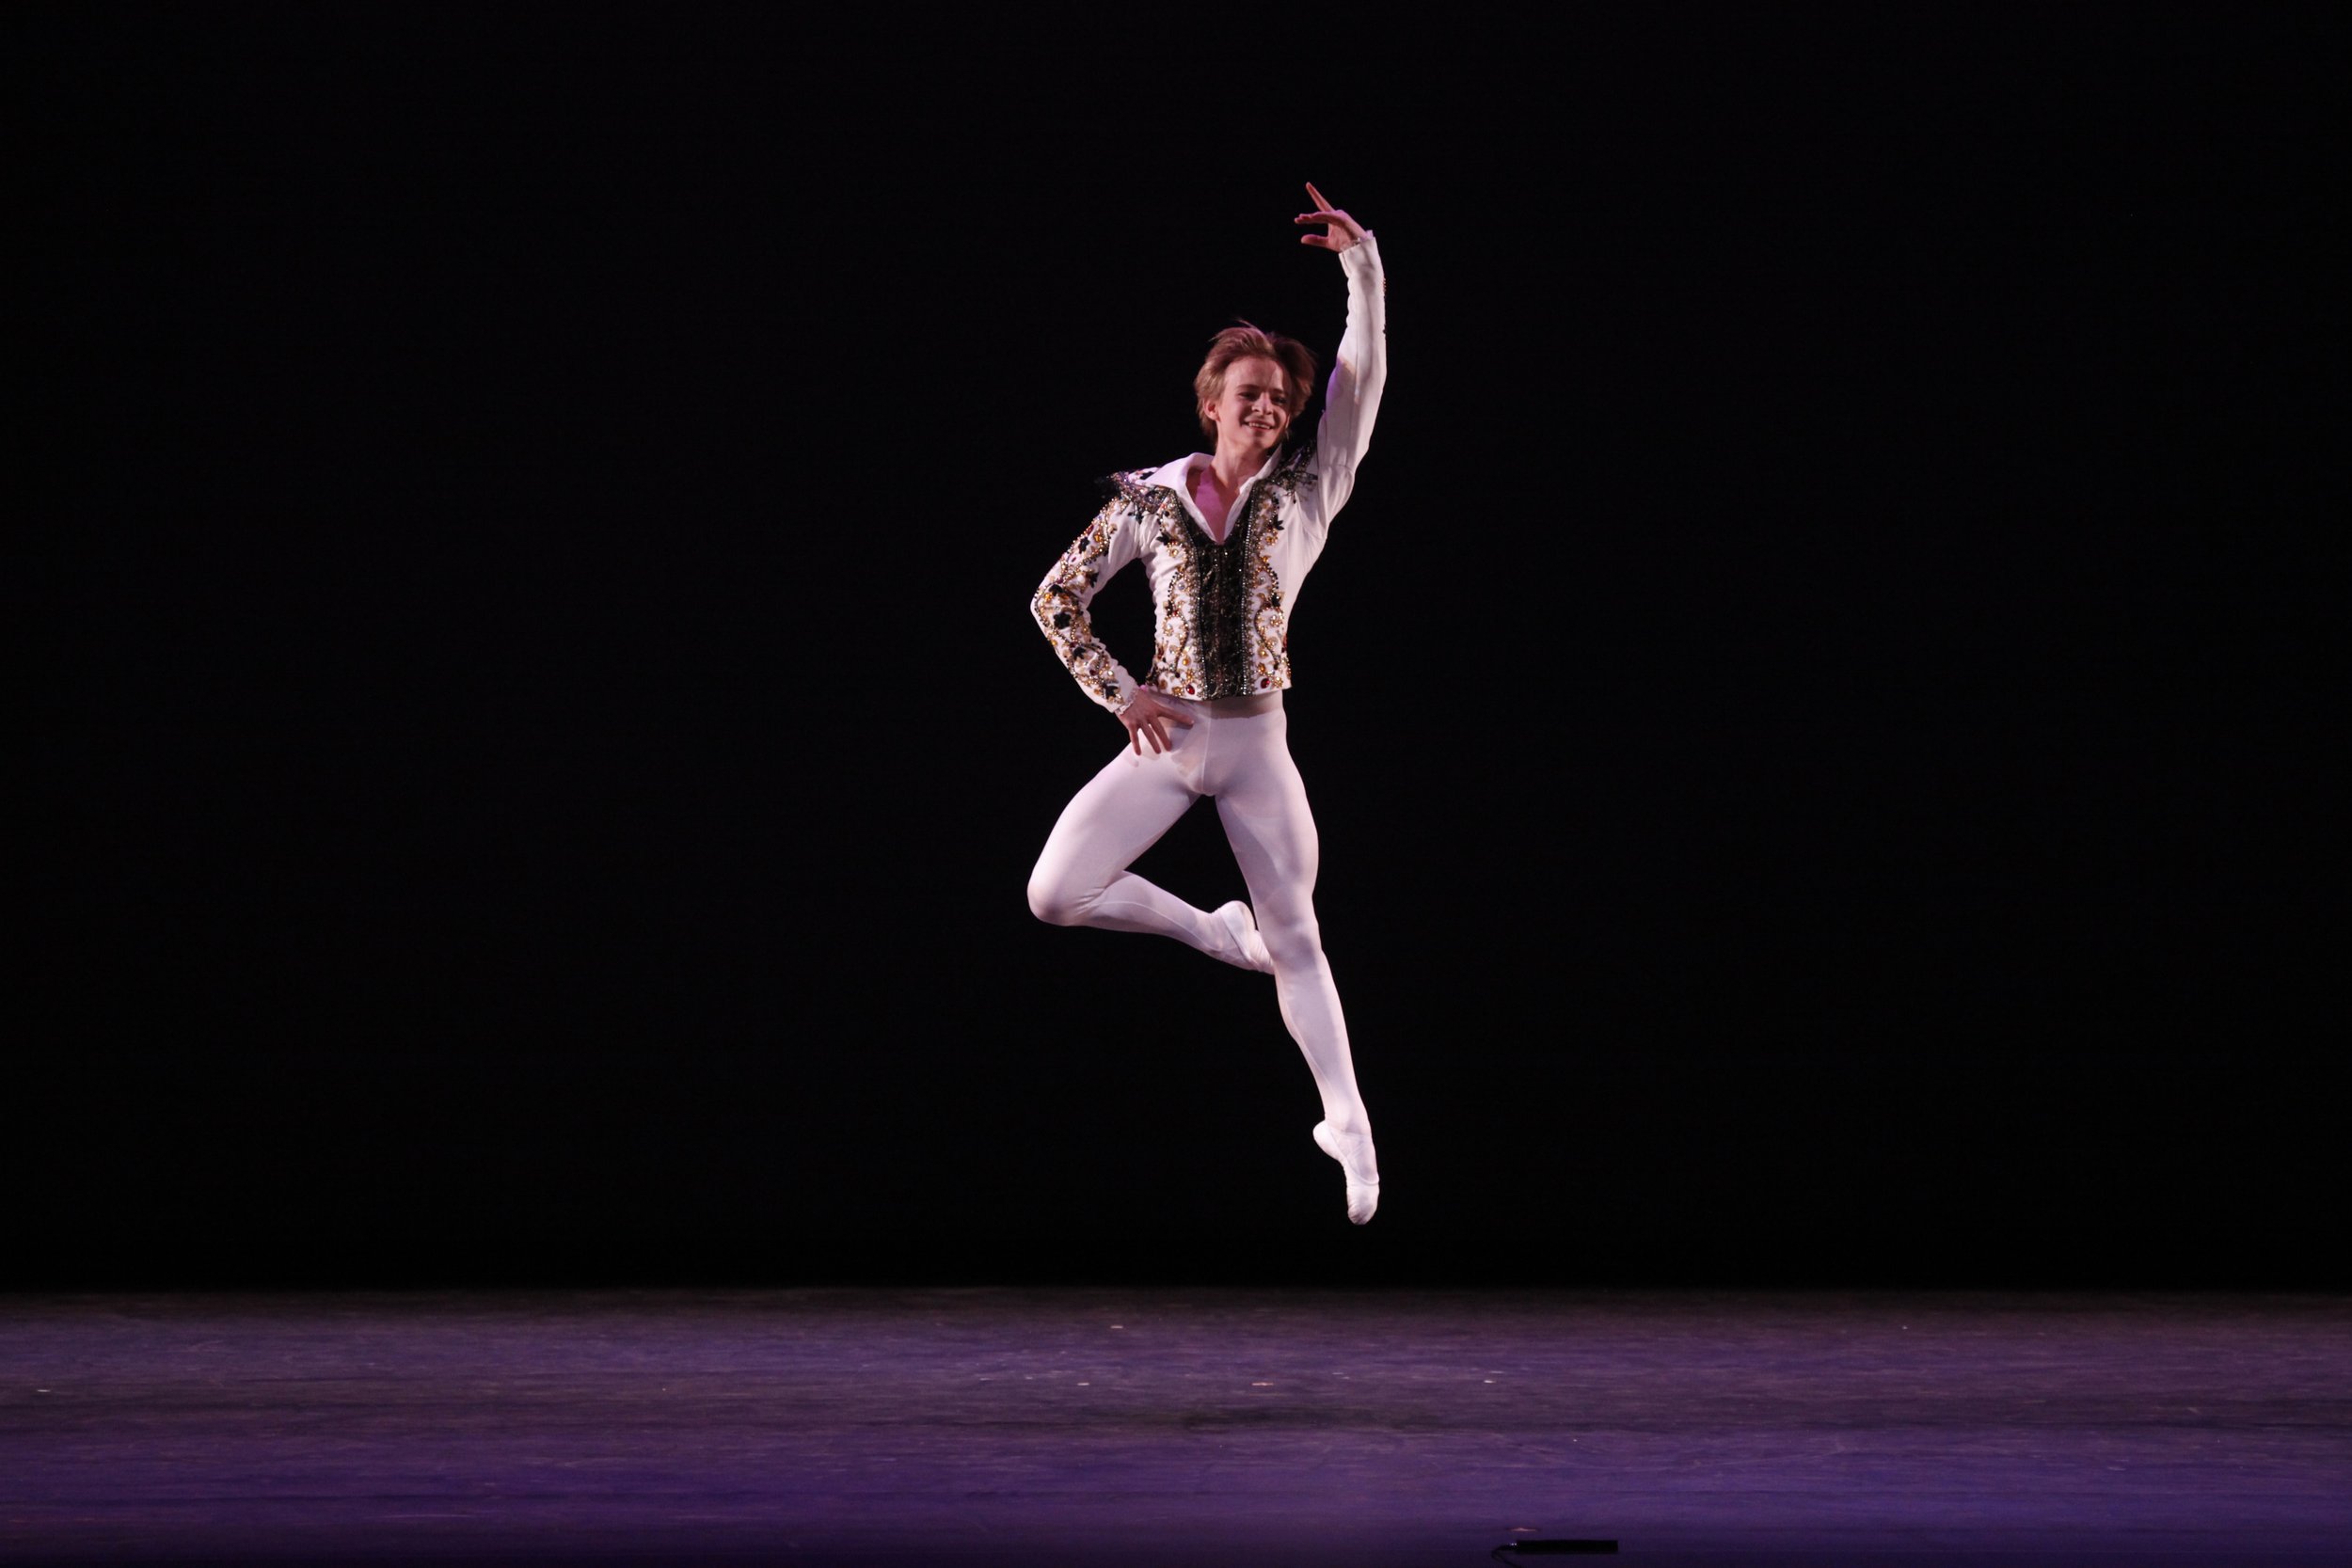  Daniil Simkin in Don Q, American Ballet Theatre 